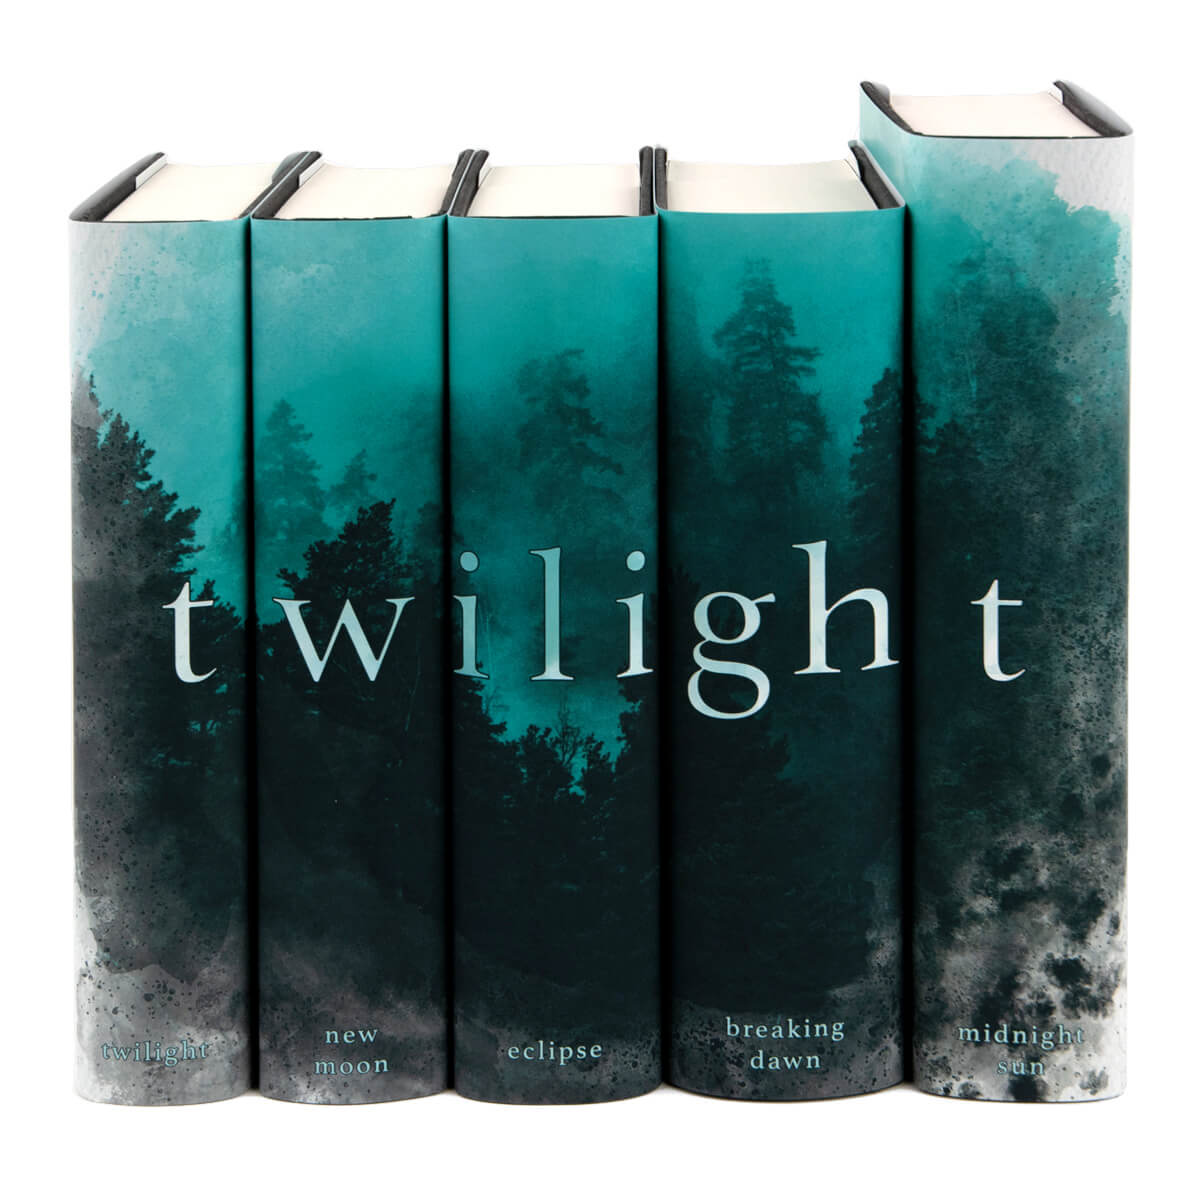 Customized The Twilight Saga Book Set